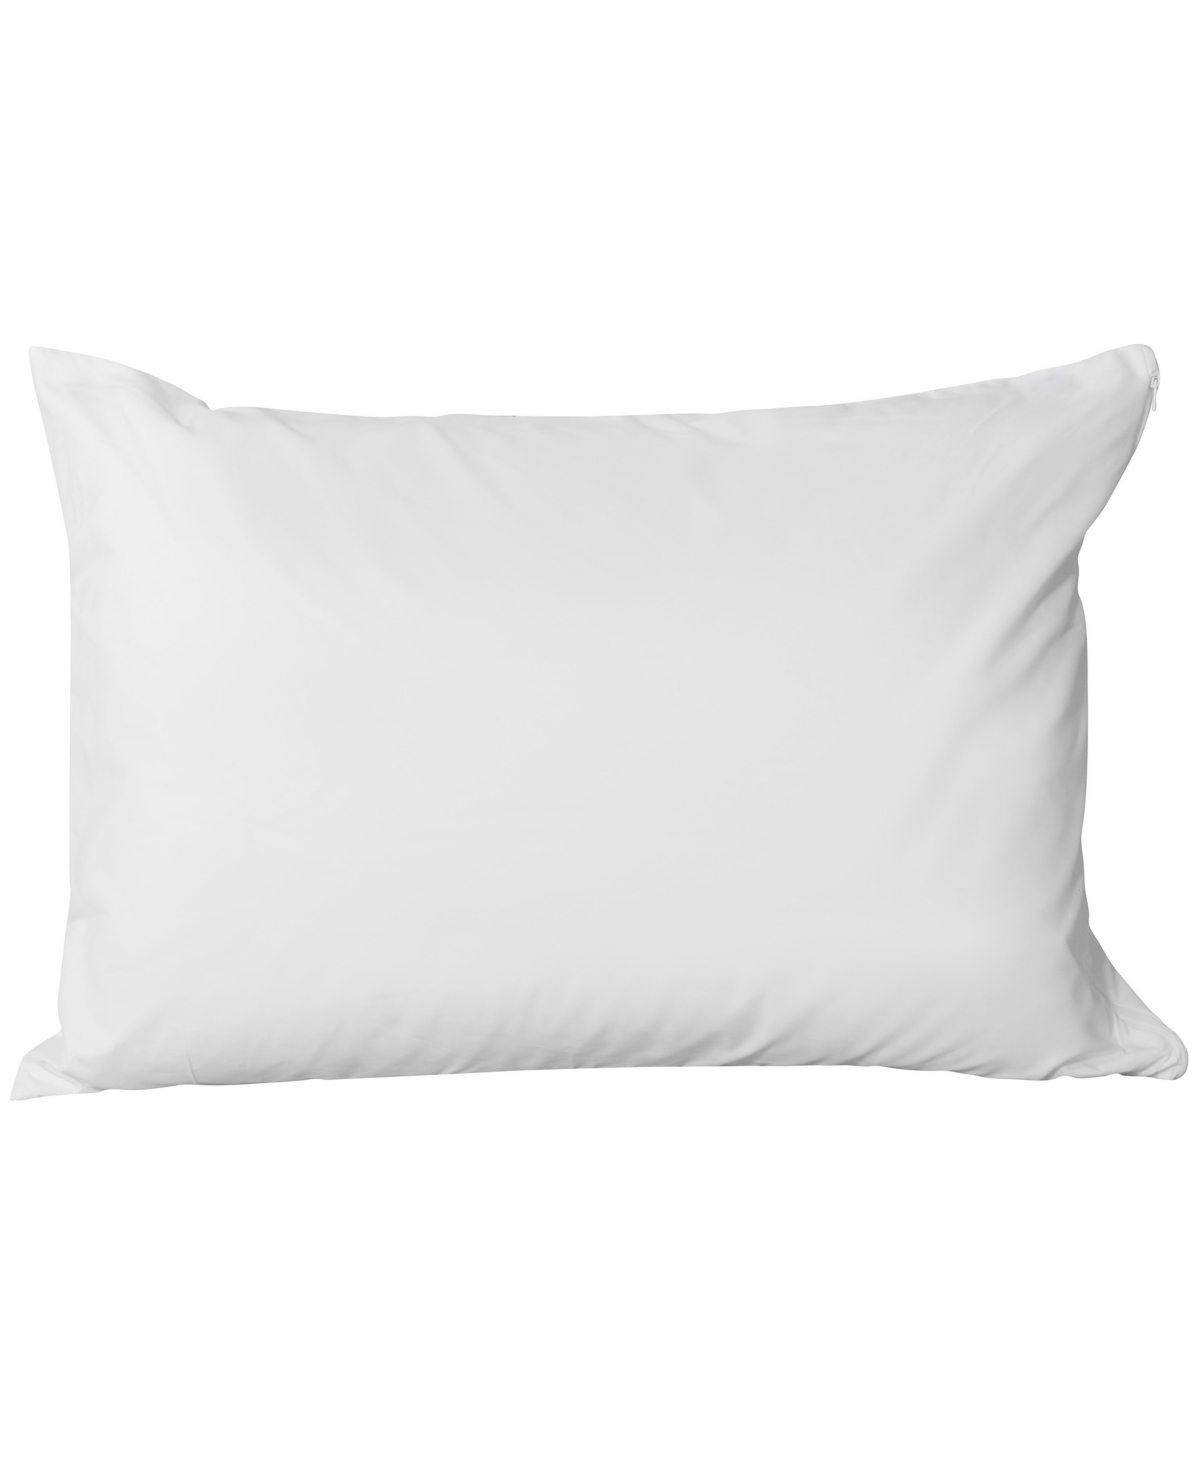 13475999 AllerEase Reserve Cotton Fresh Pillow Protector, S sku 13475999